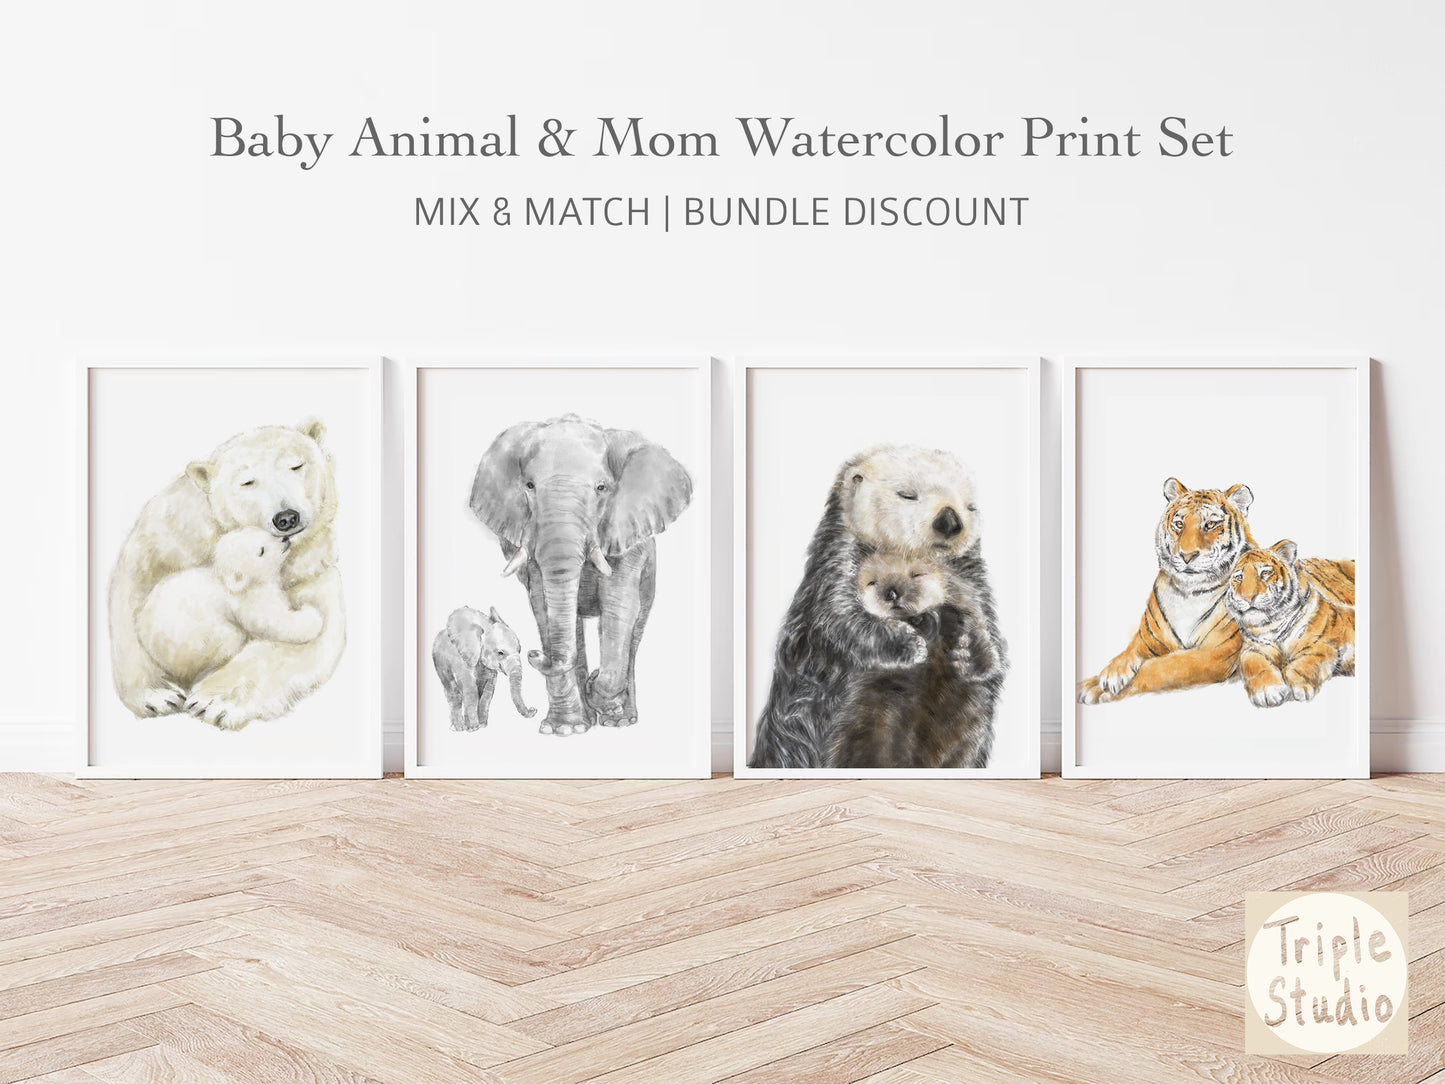 Tiger Mom and Baby Art Print